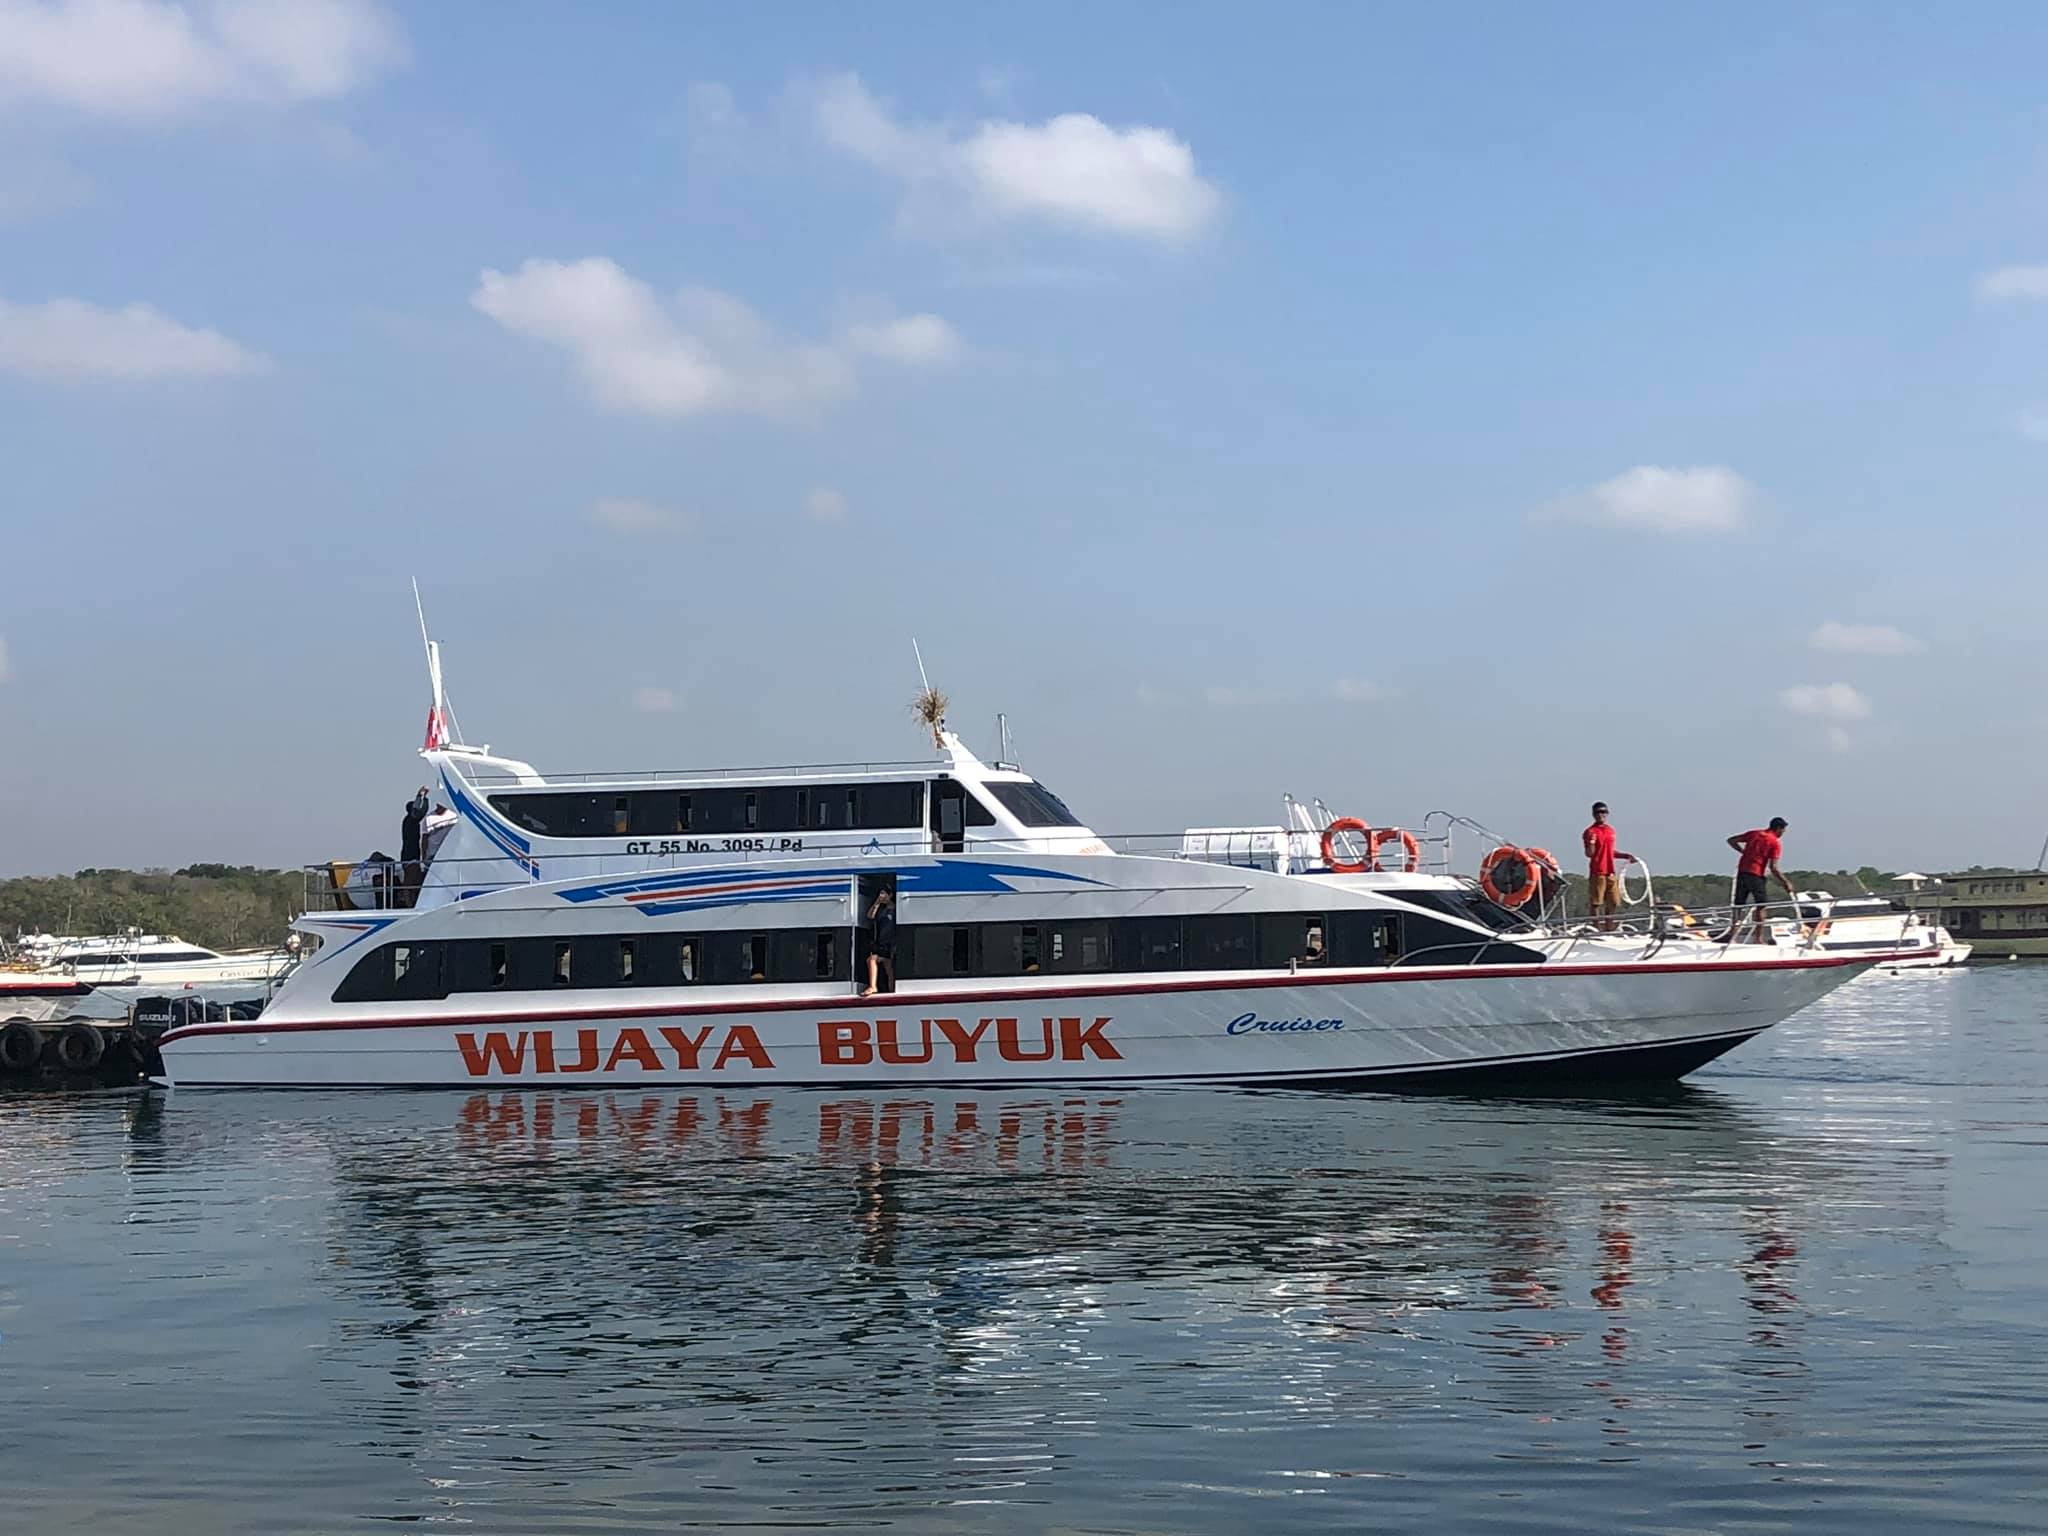 Wijaya Buyuk Fast Boat - Nusa Penida Fast boats